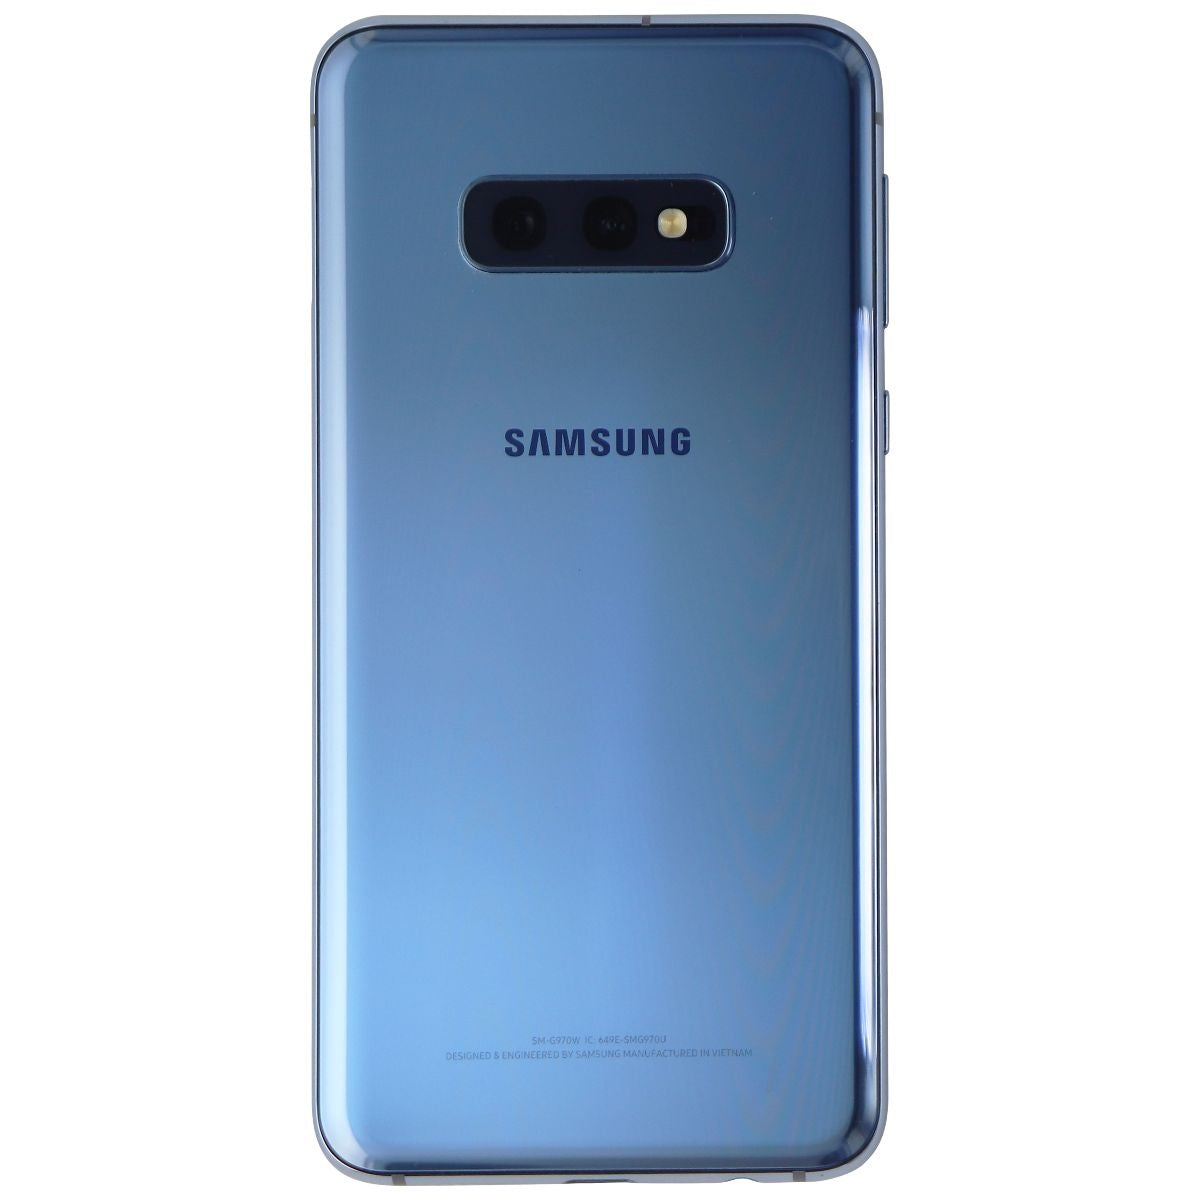 Samsung Galaxy S10e (5.8-in) (SM-G970W) GSM + CDMA - 256GB/Prism